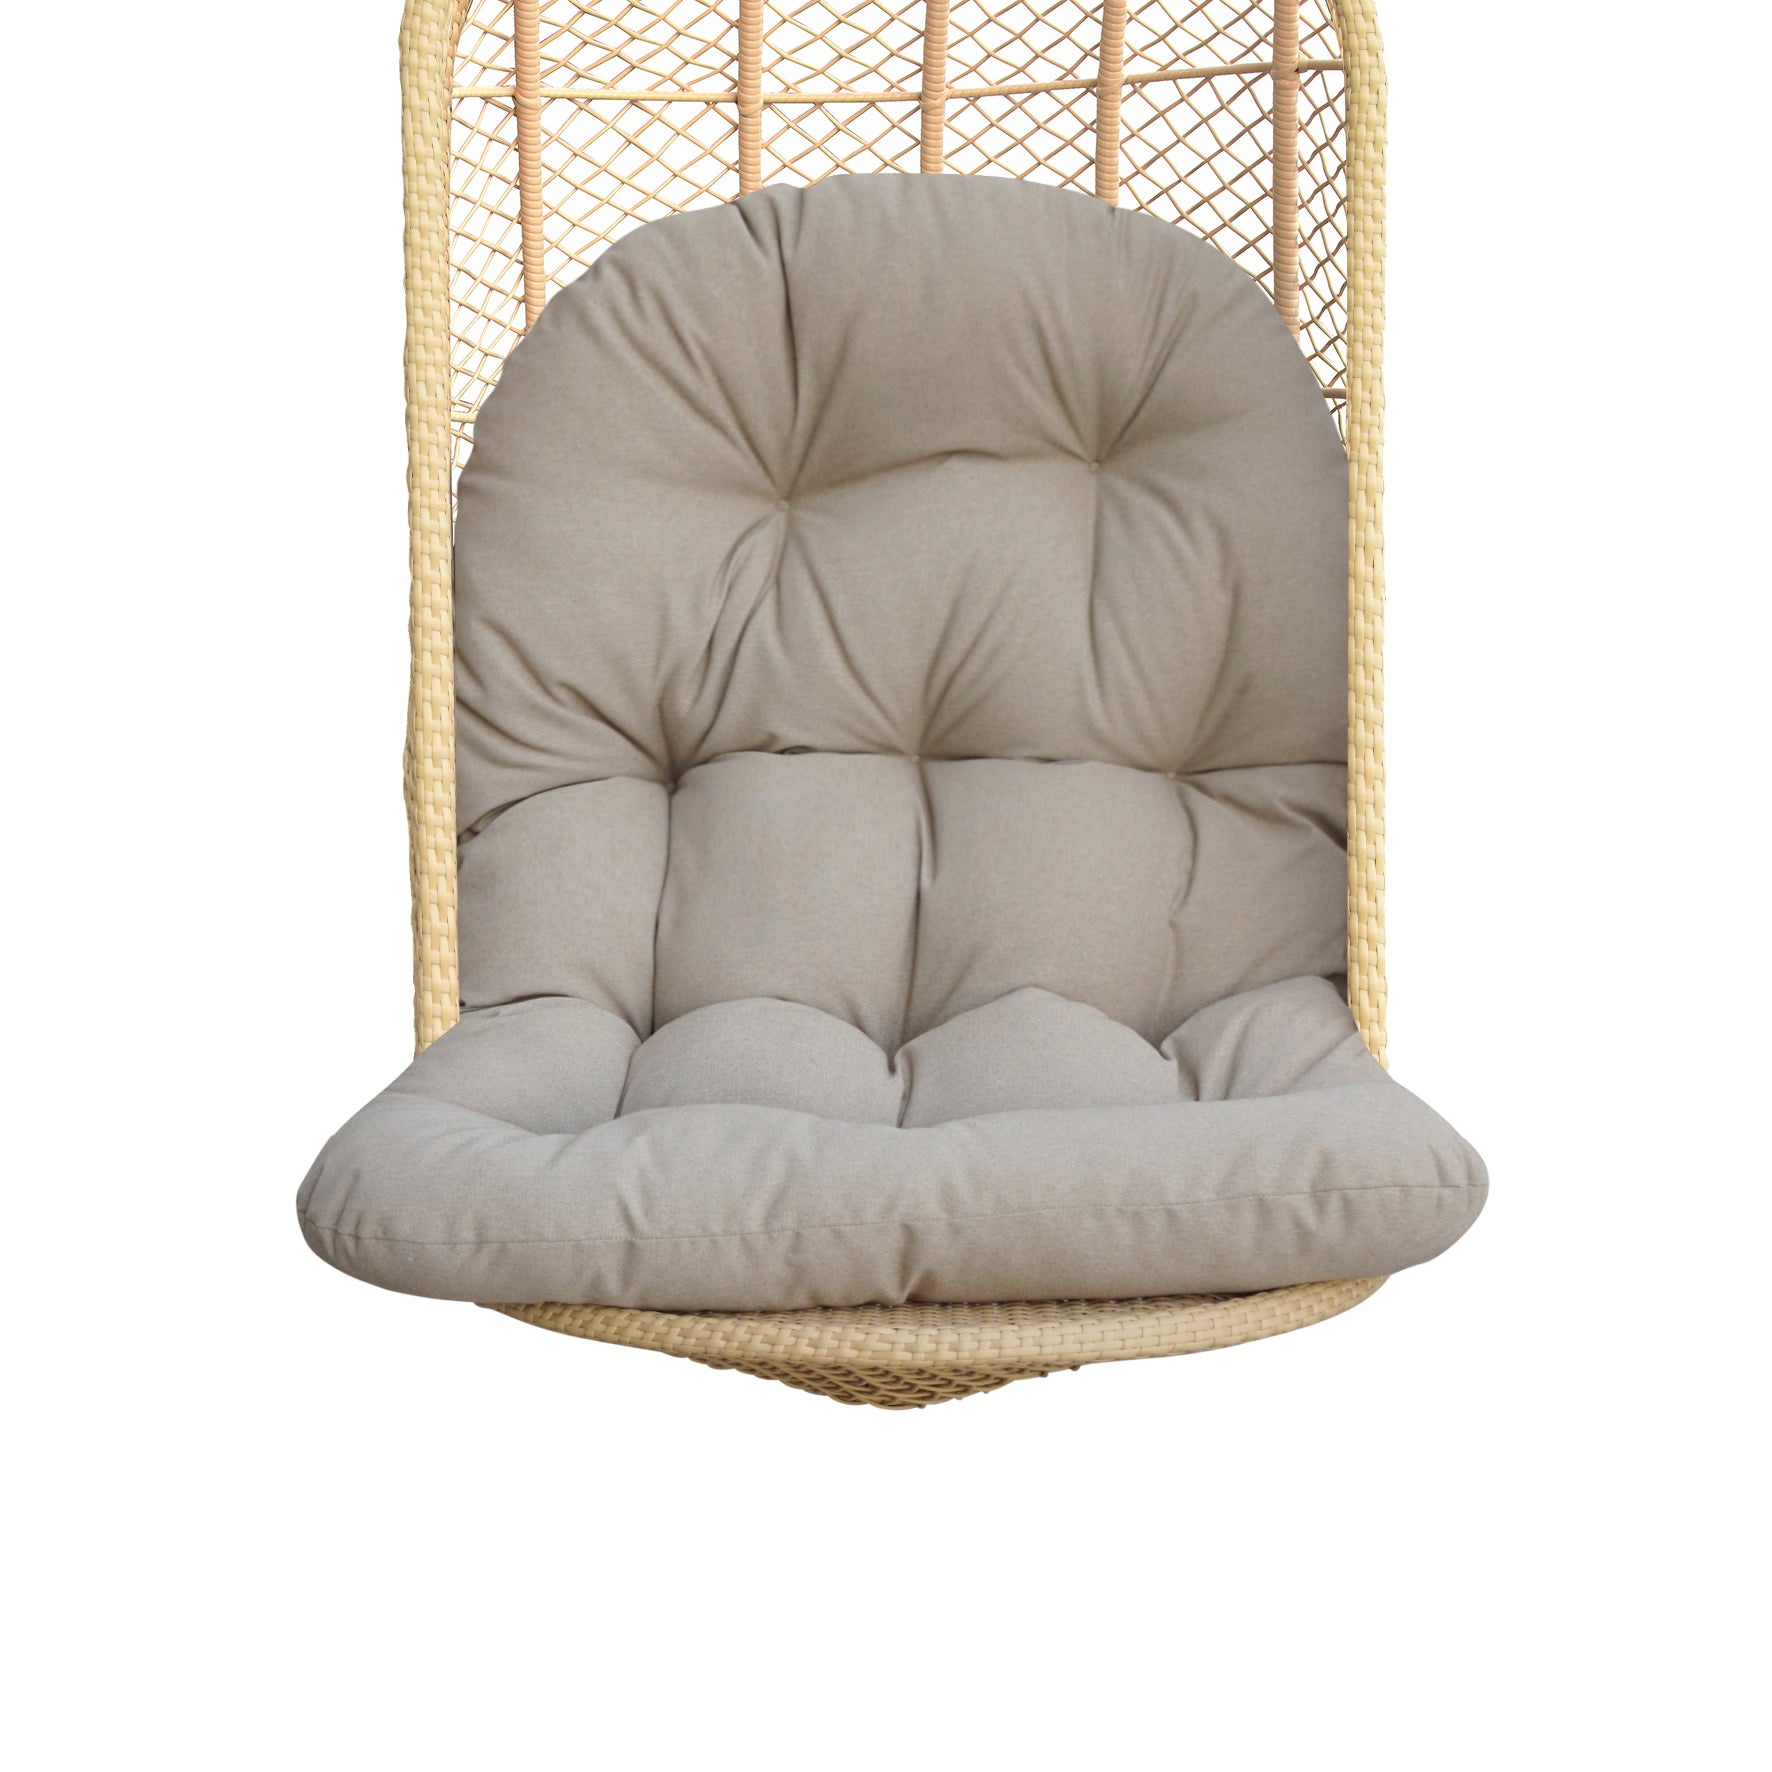 Patio Balcony Hanging Basket Chair Cushions Egg Chair Swing Chair Pads (Olefin Oatmeal)